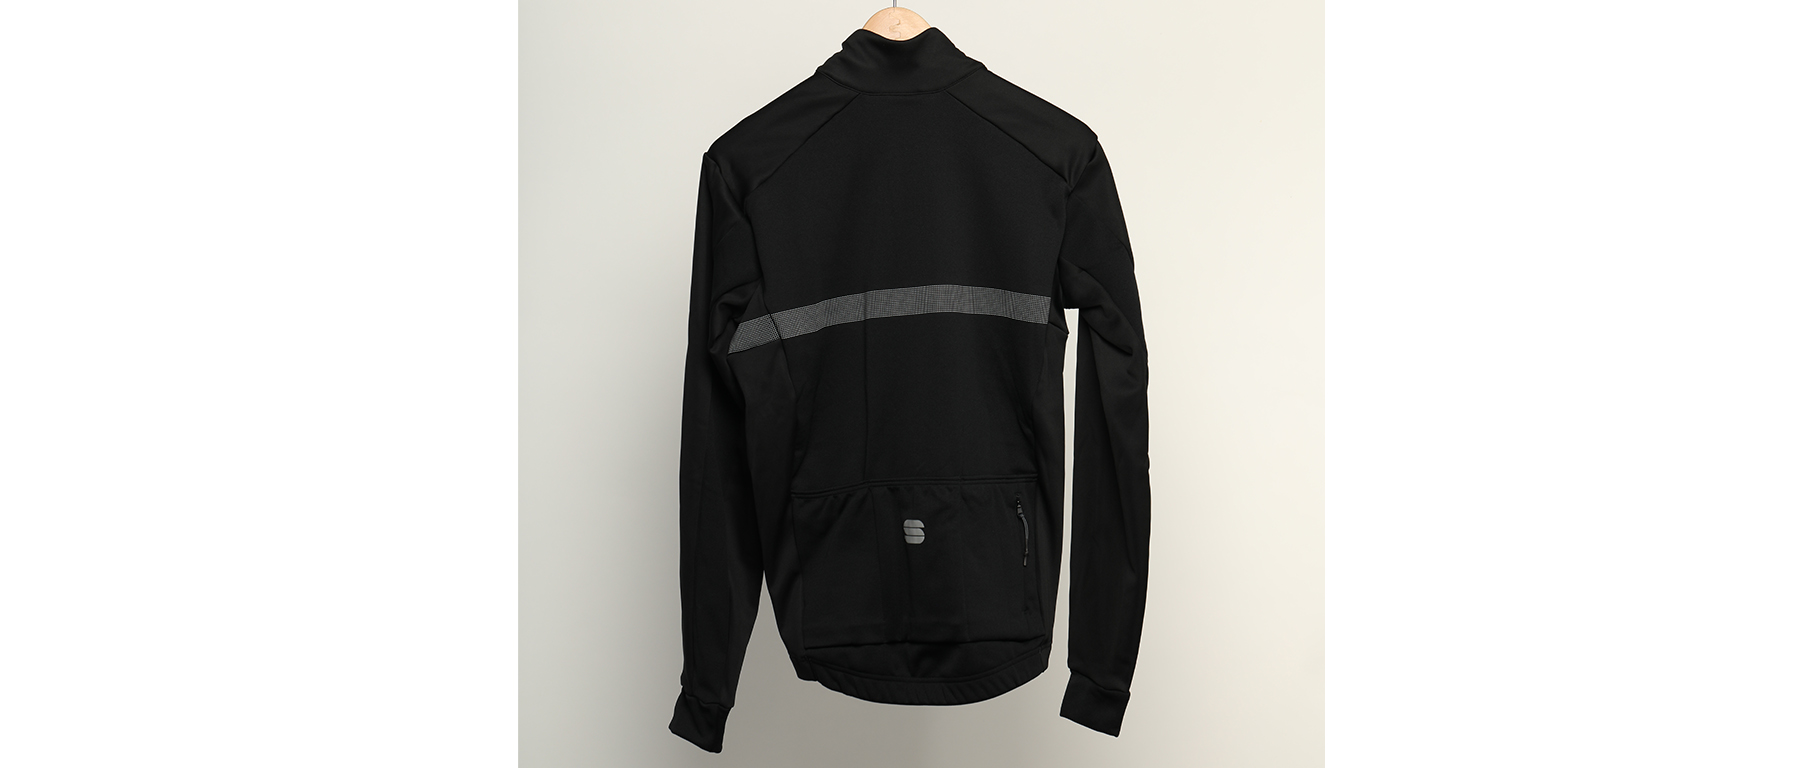 Sportful Giara Softshell Jacket SAMPLE